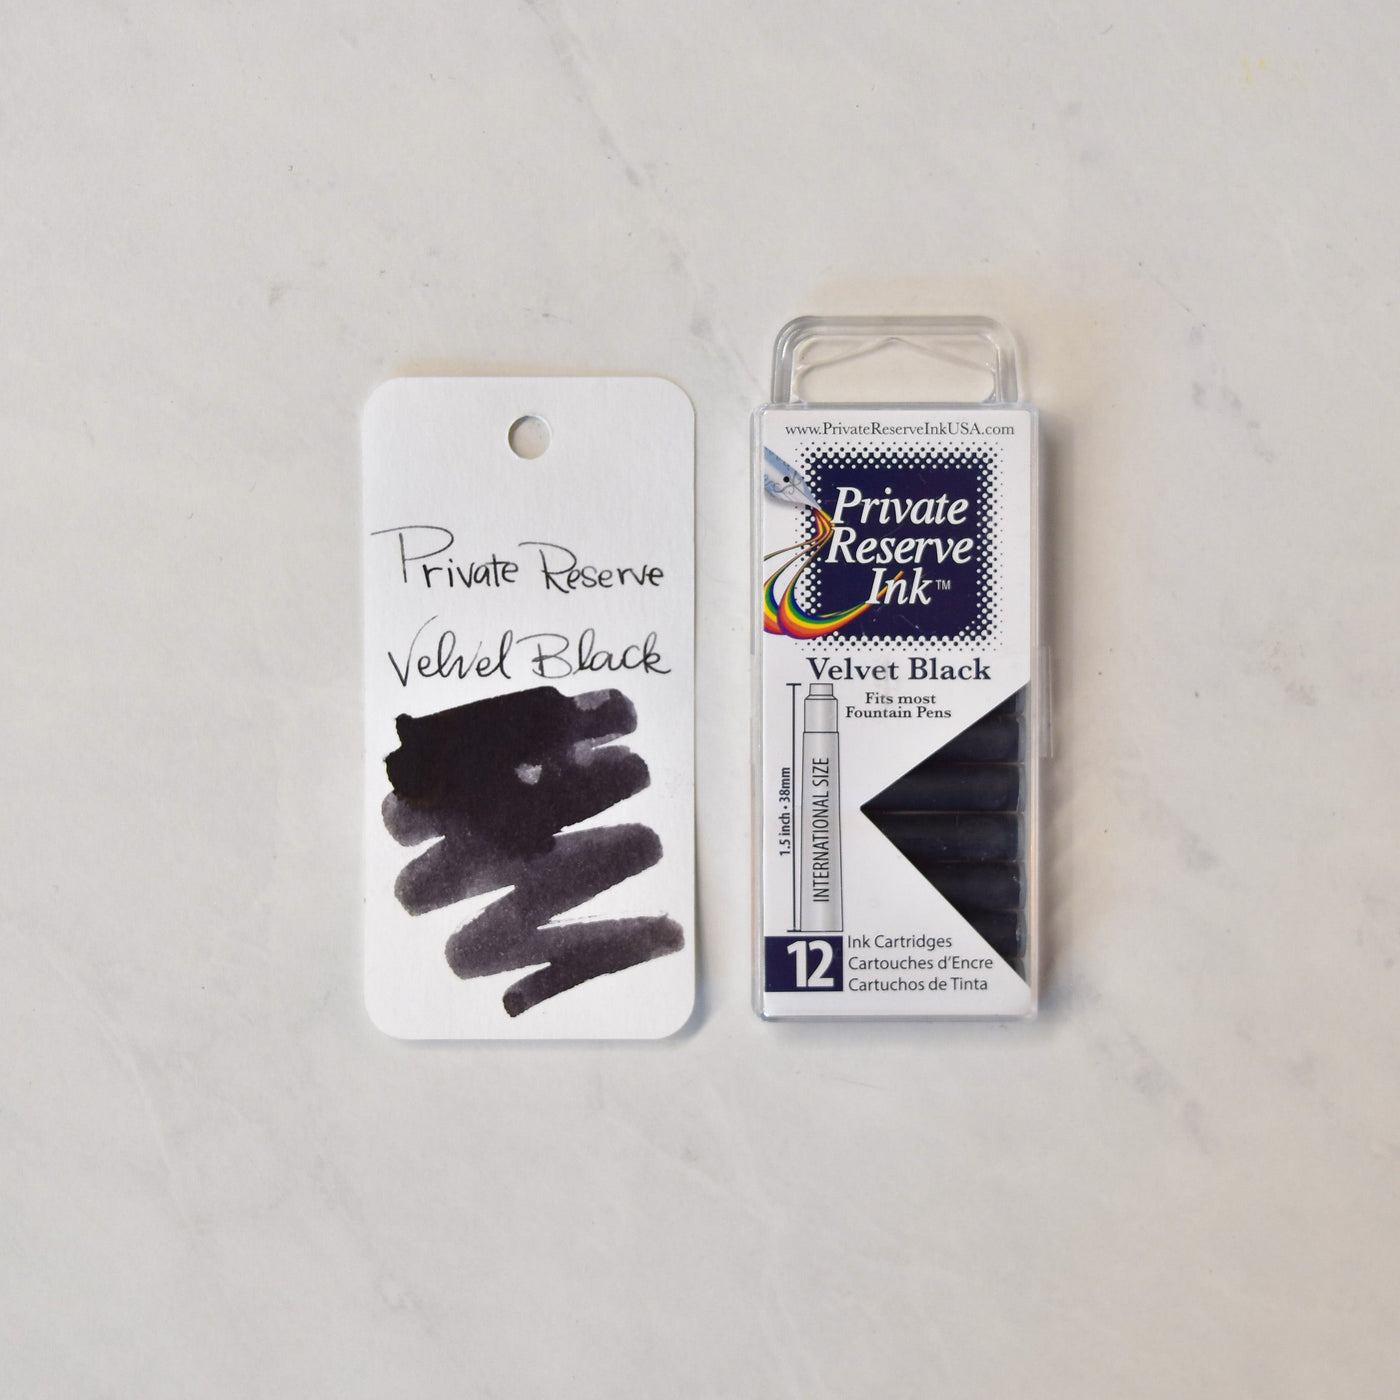 Private Reserve Velvet Black Ink Cartridges